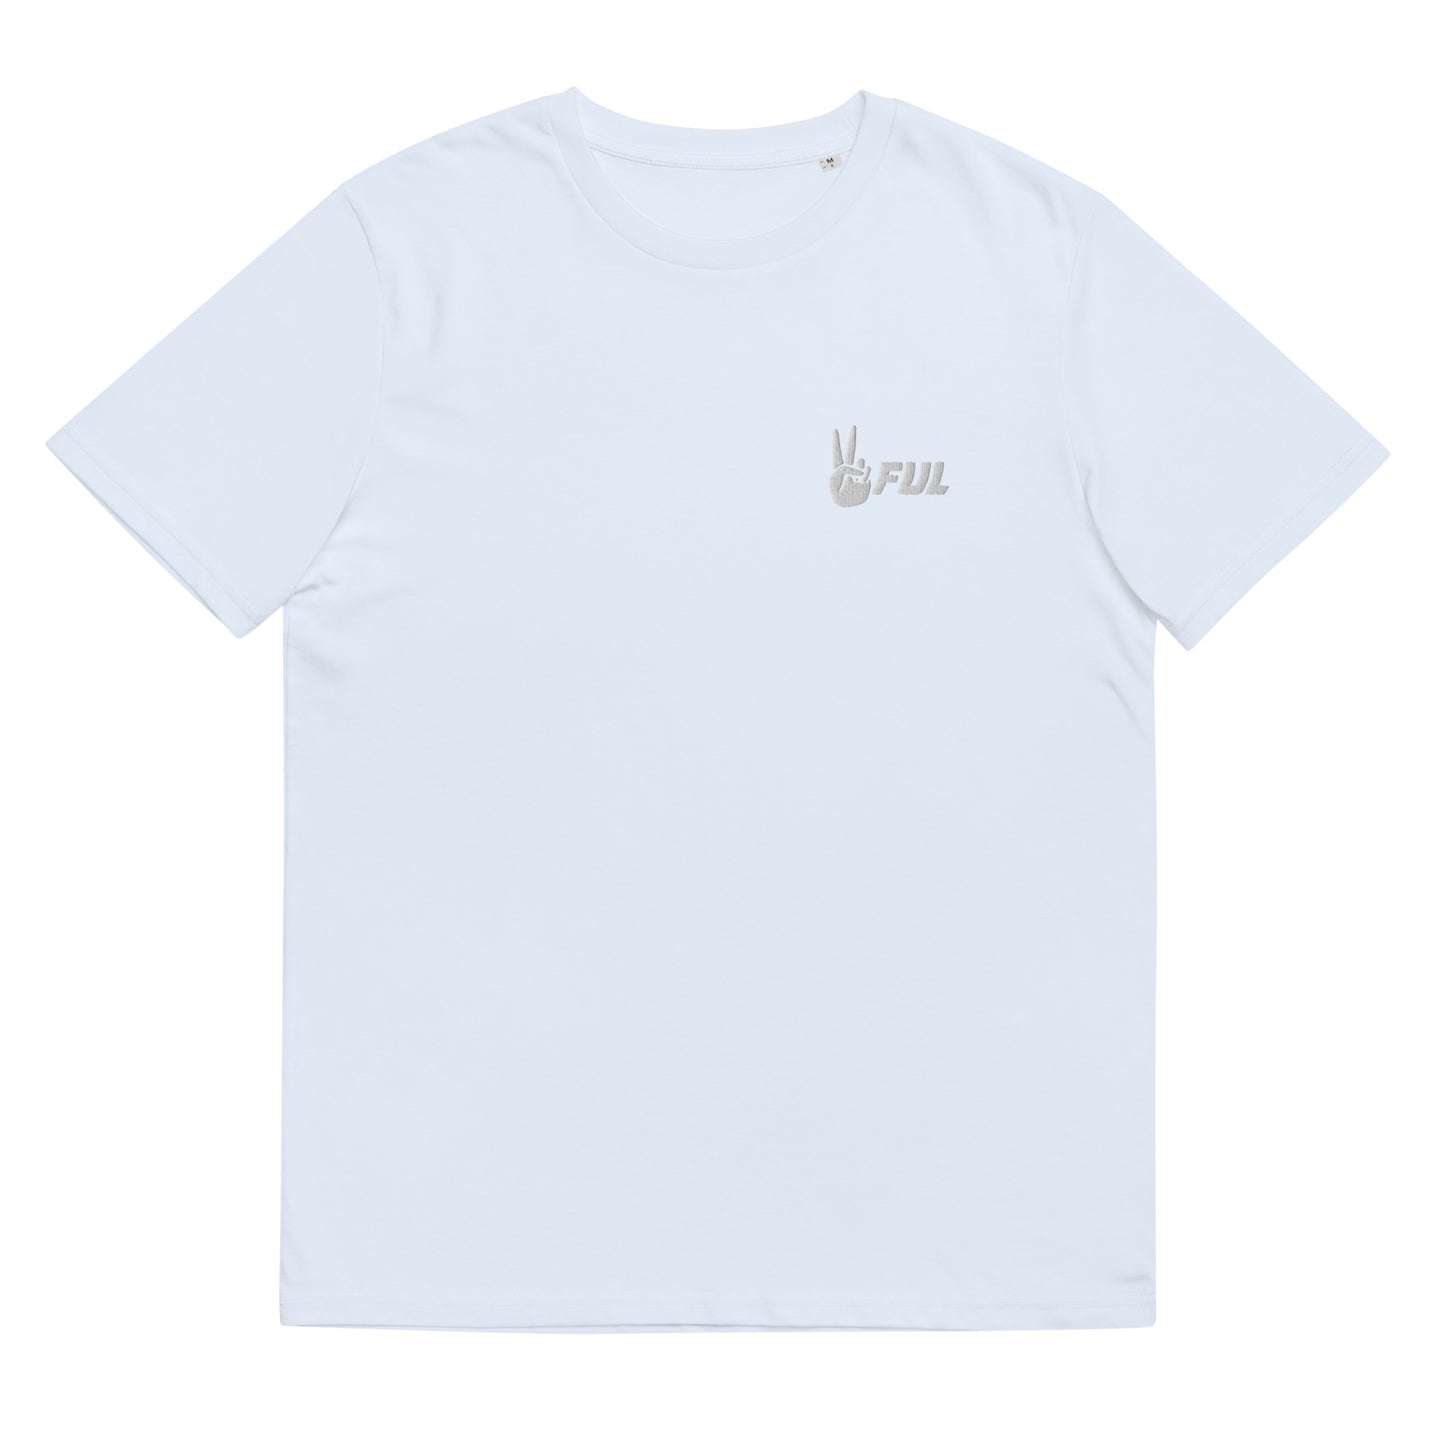 You good fam? Unisex organic cotton t-shirt